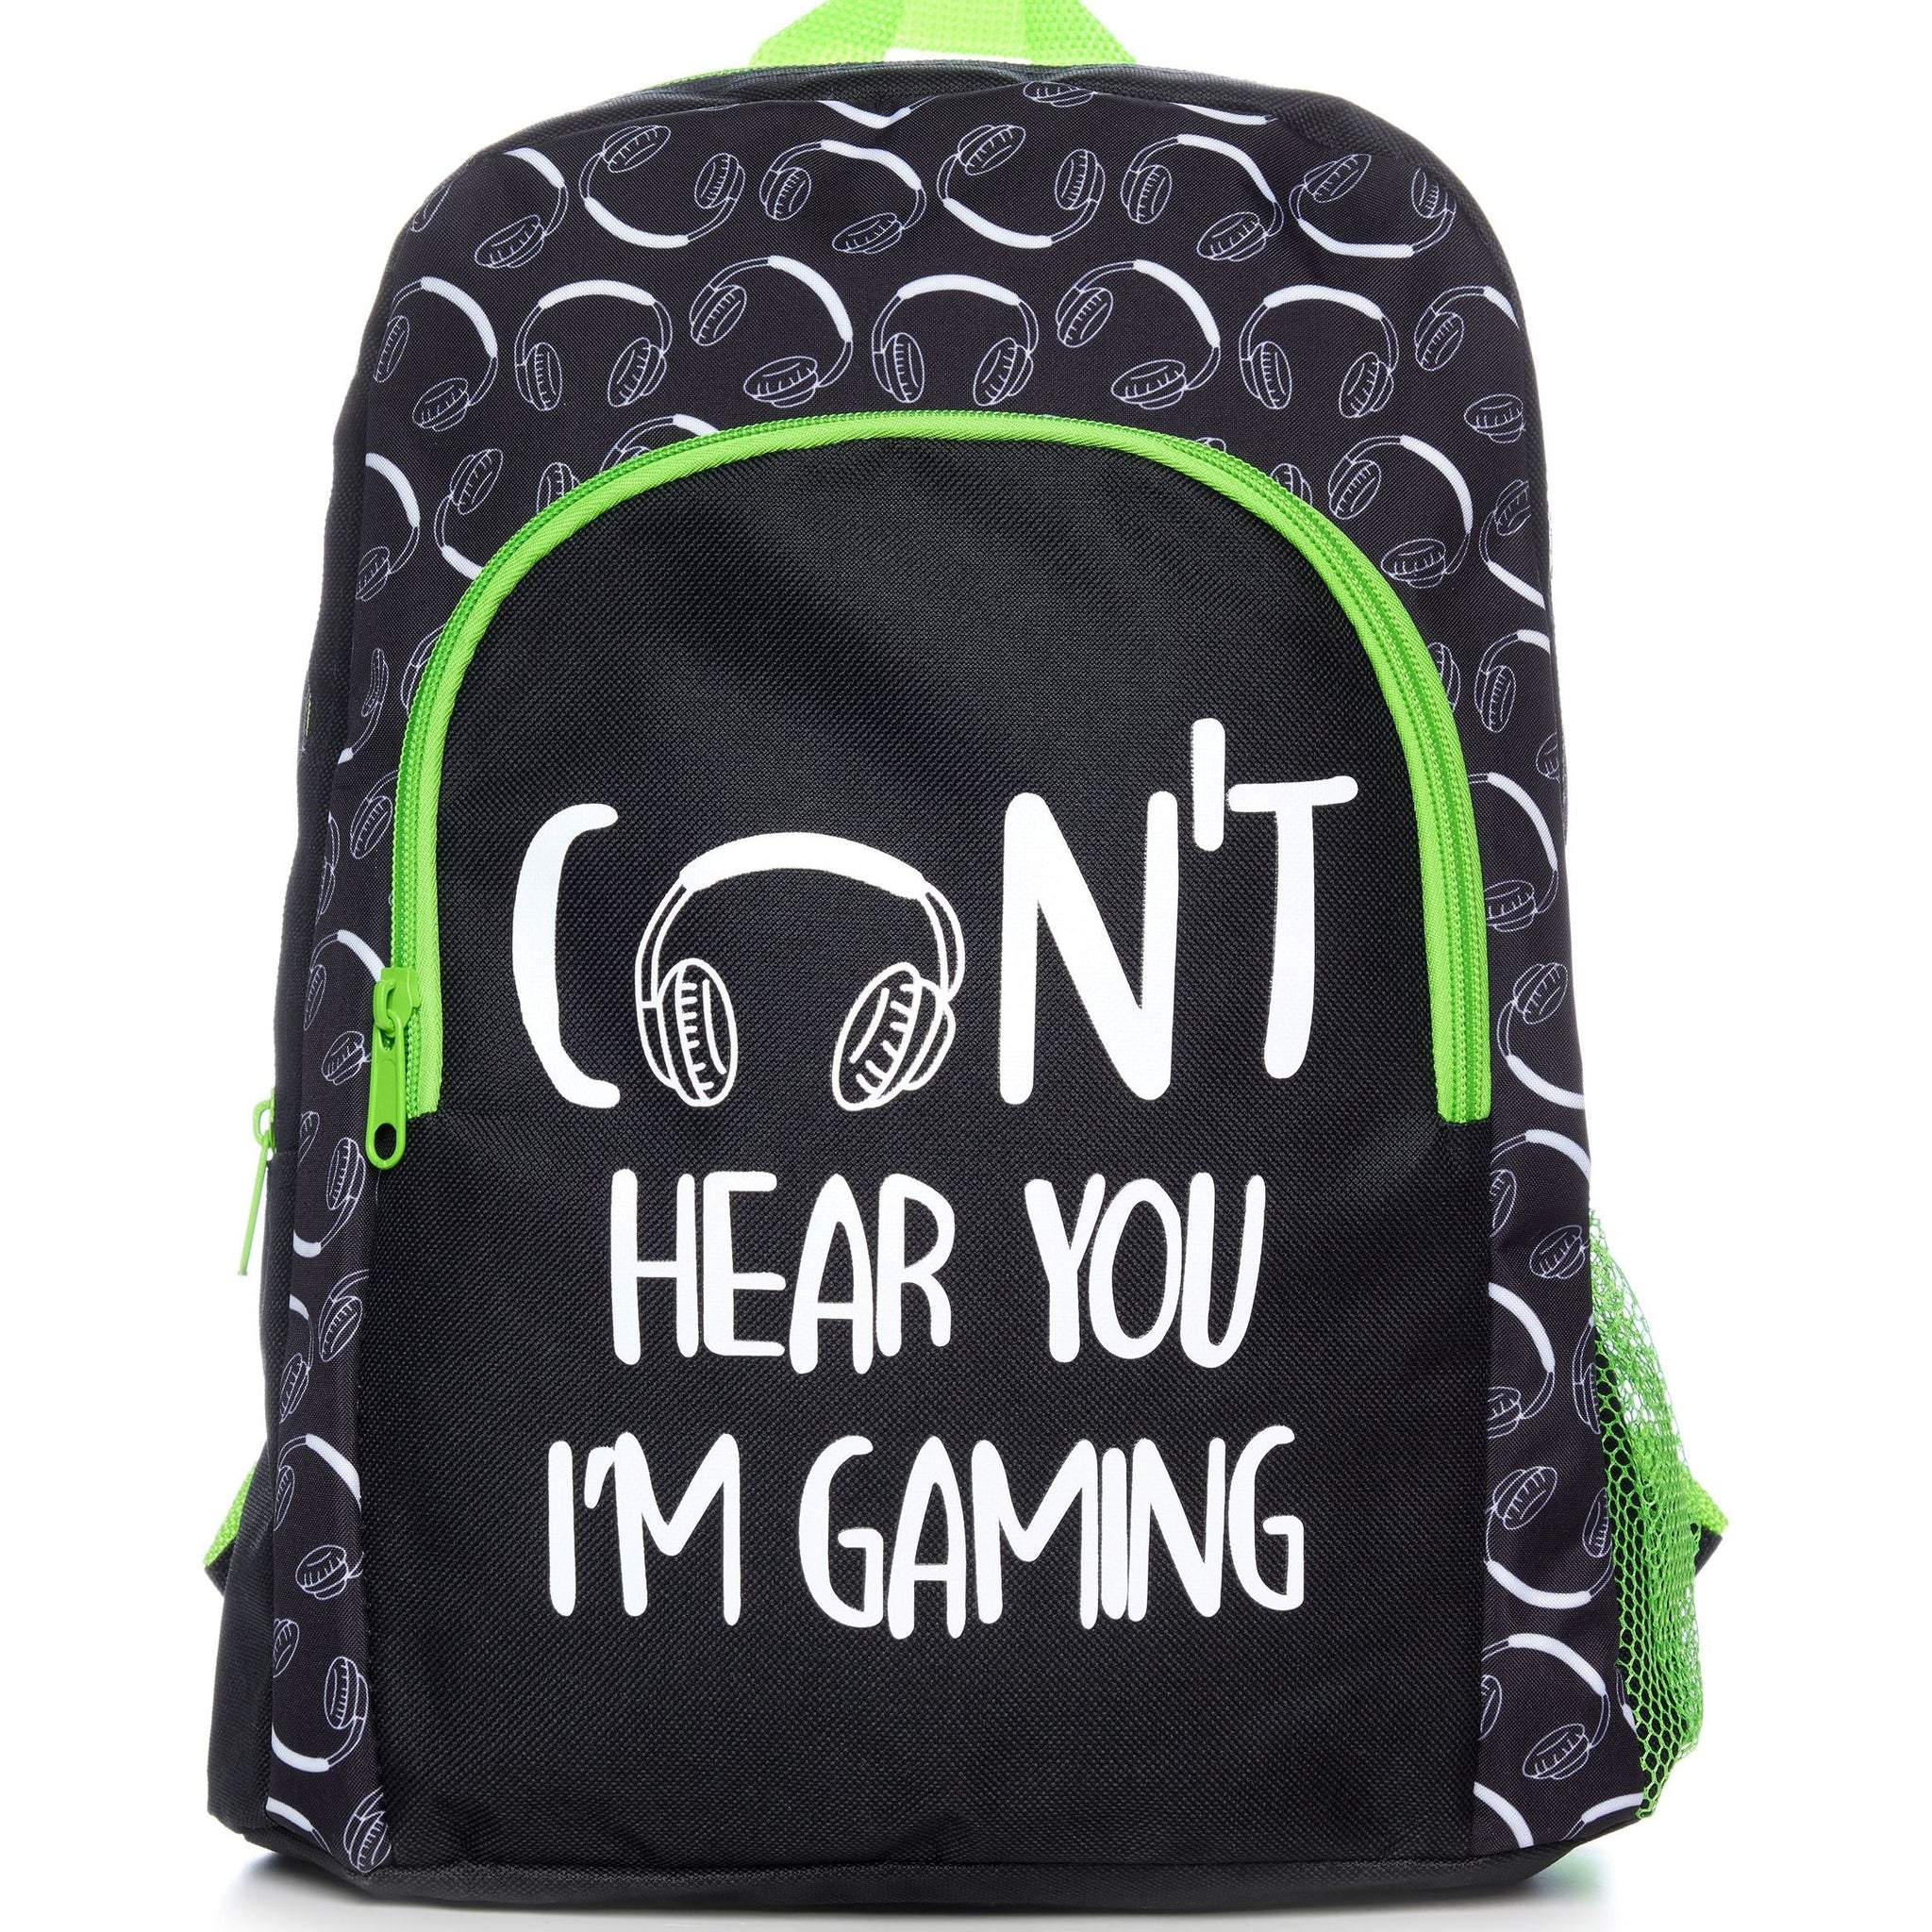 Can't Hear You I'm Gaming School Bag, Kids Boys Gamer Backpack